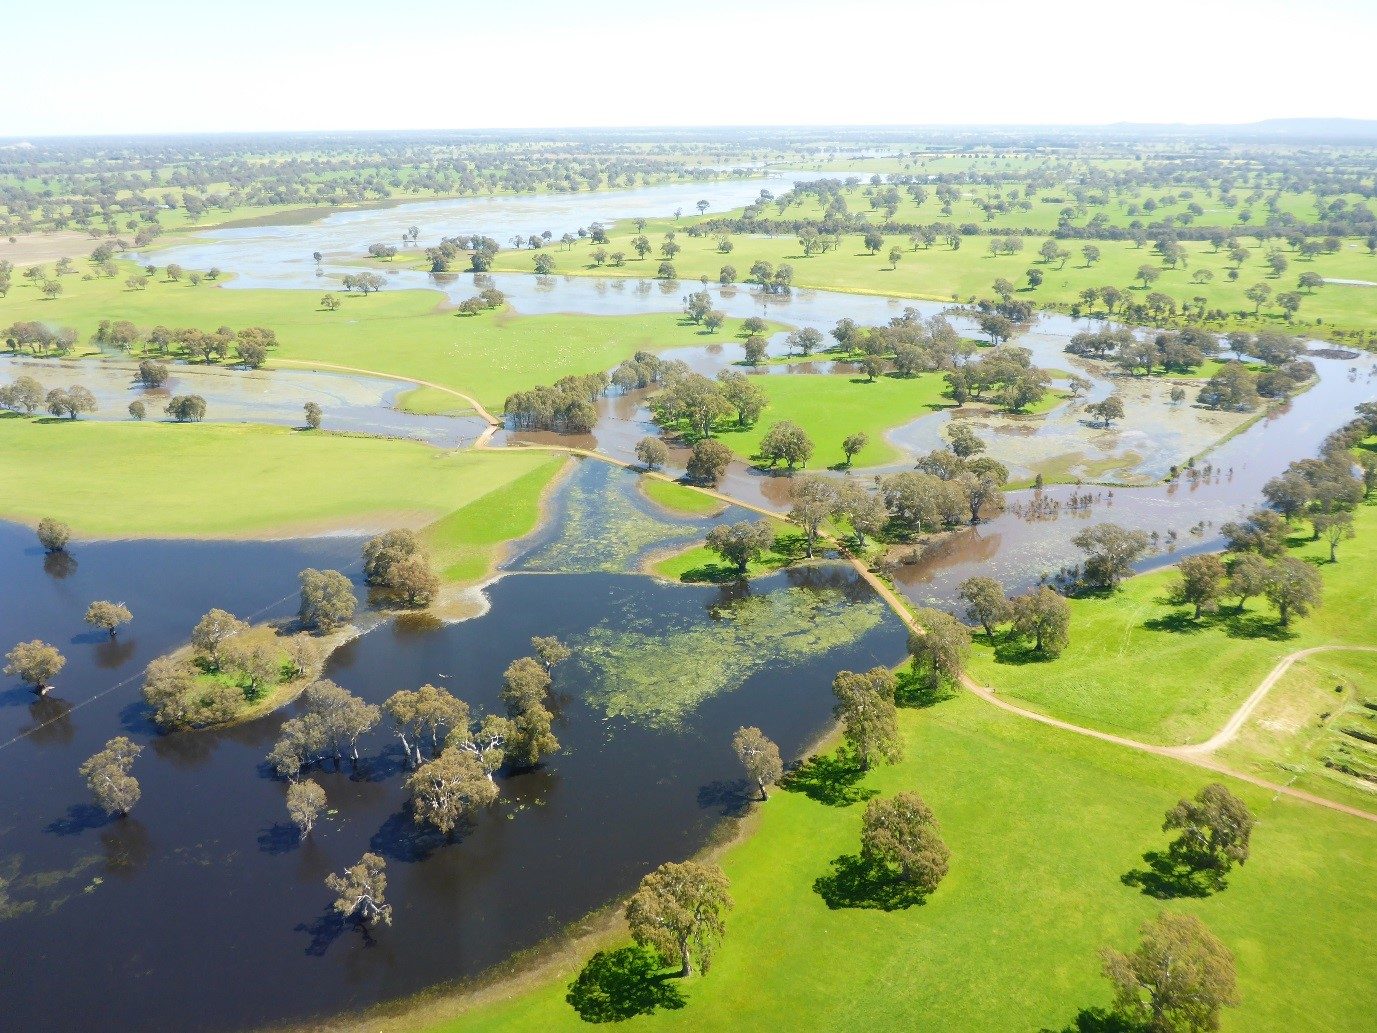 NSW government initiates major cuts in floodplain harvesting